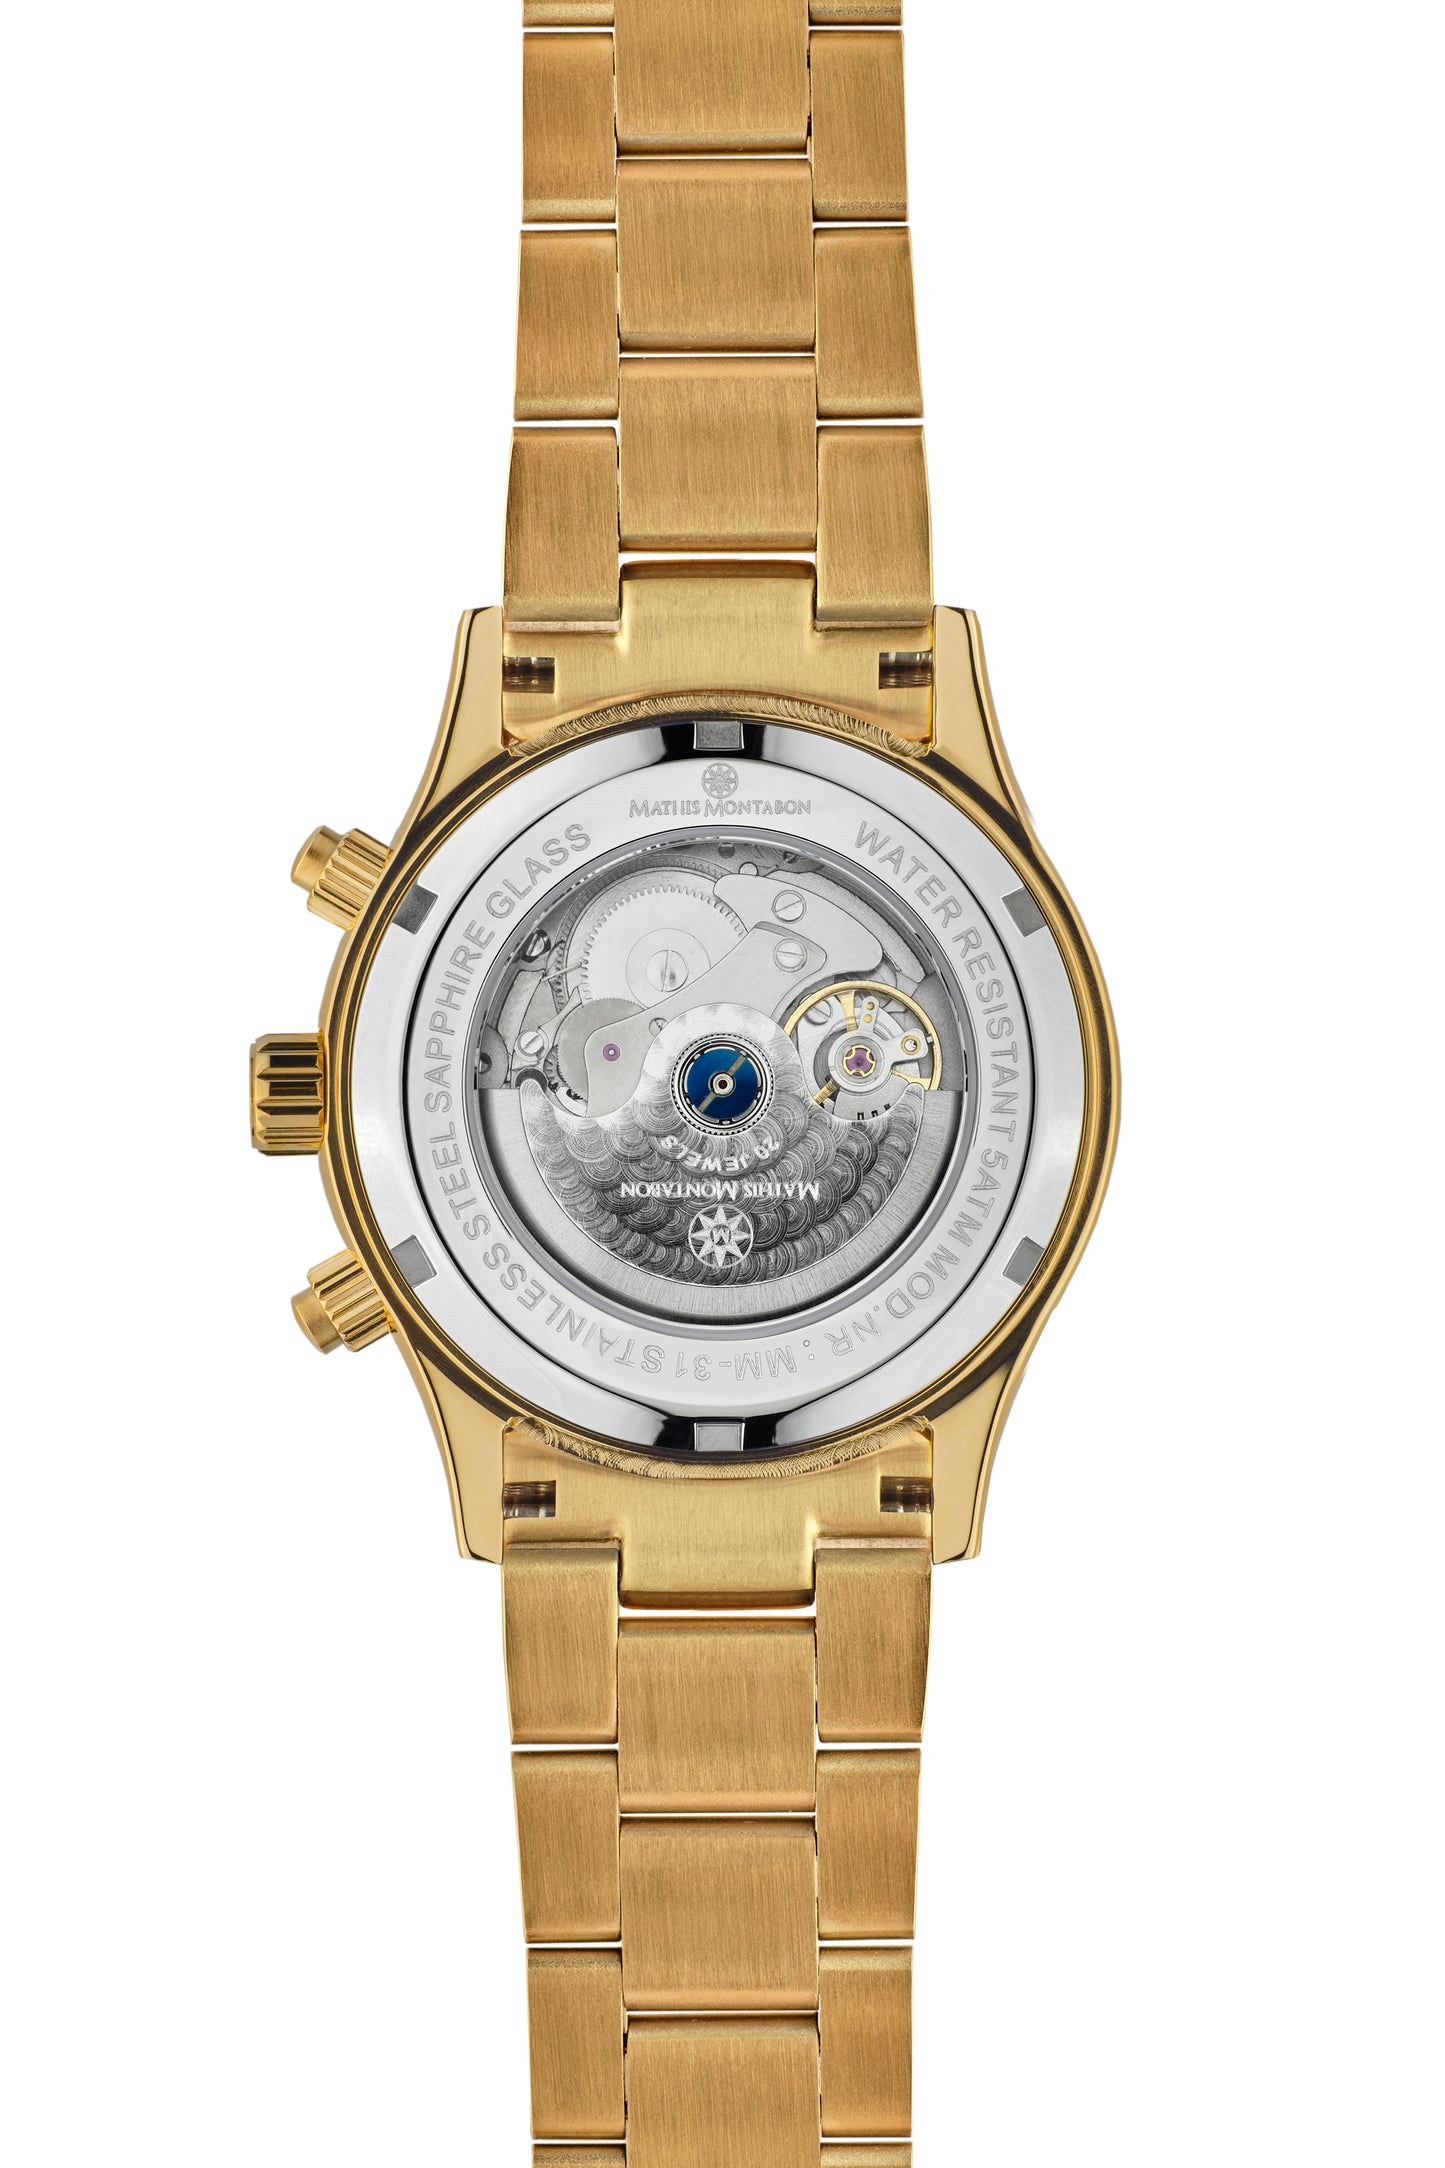 Automatic watches — Aventurier — Mathis Montabon — gold black